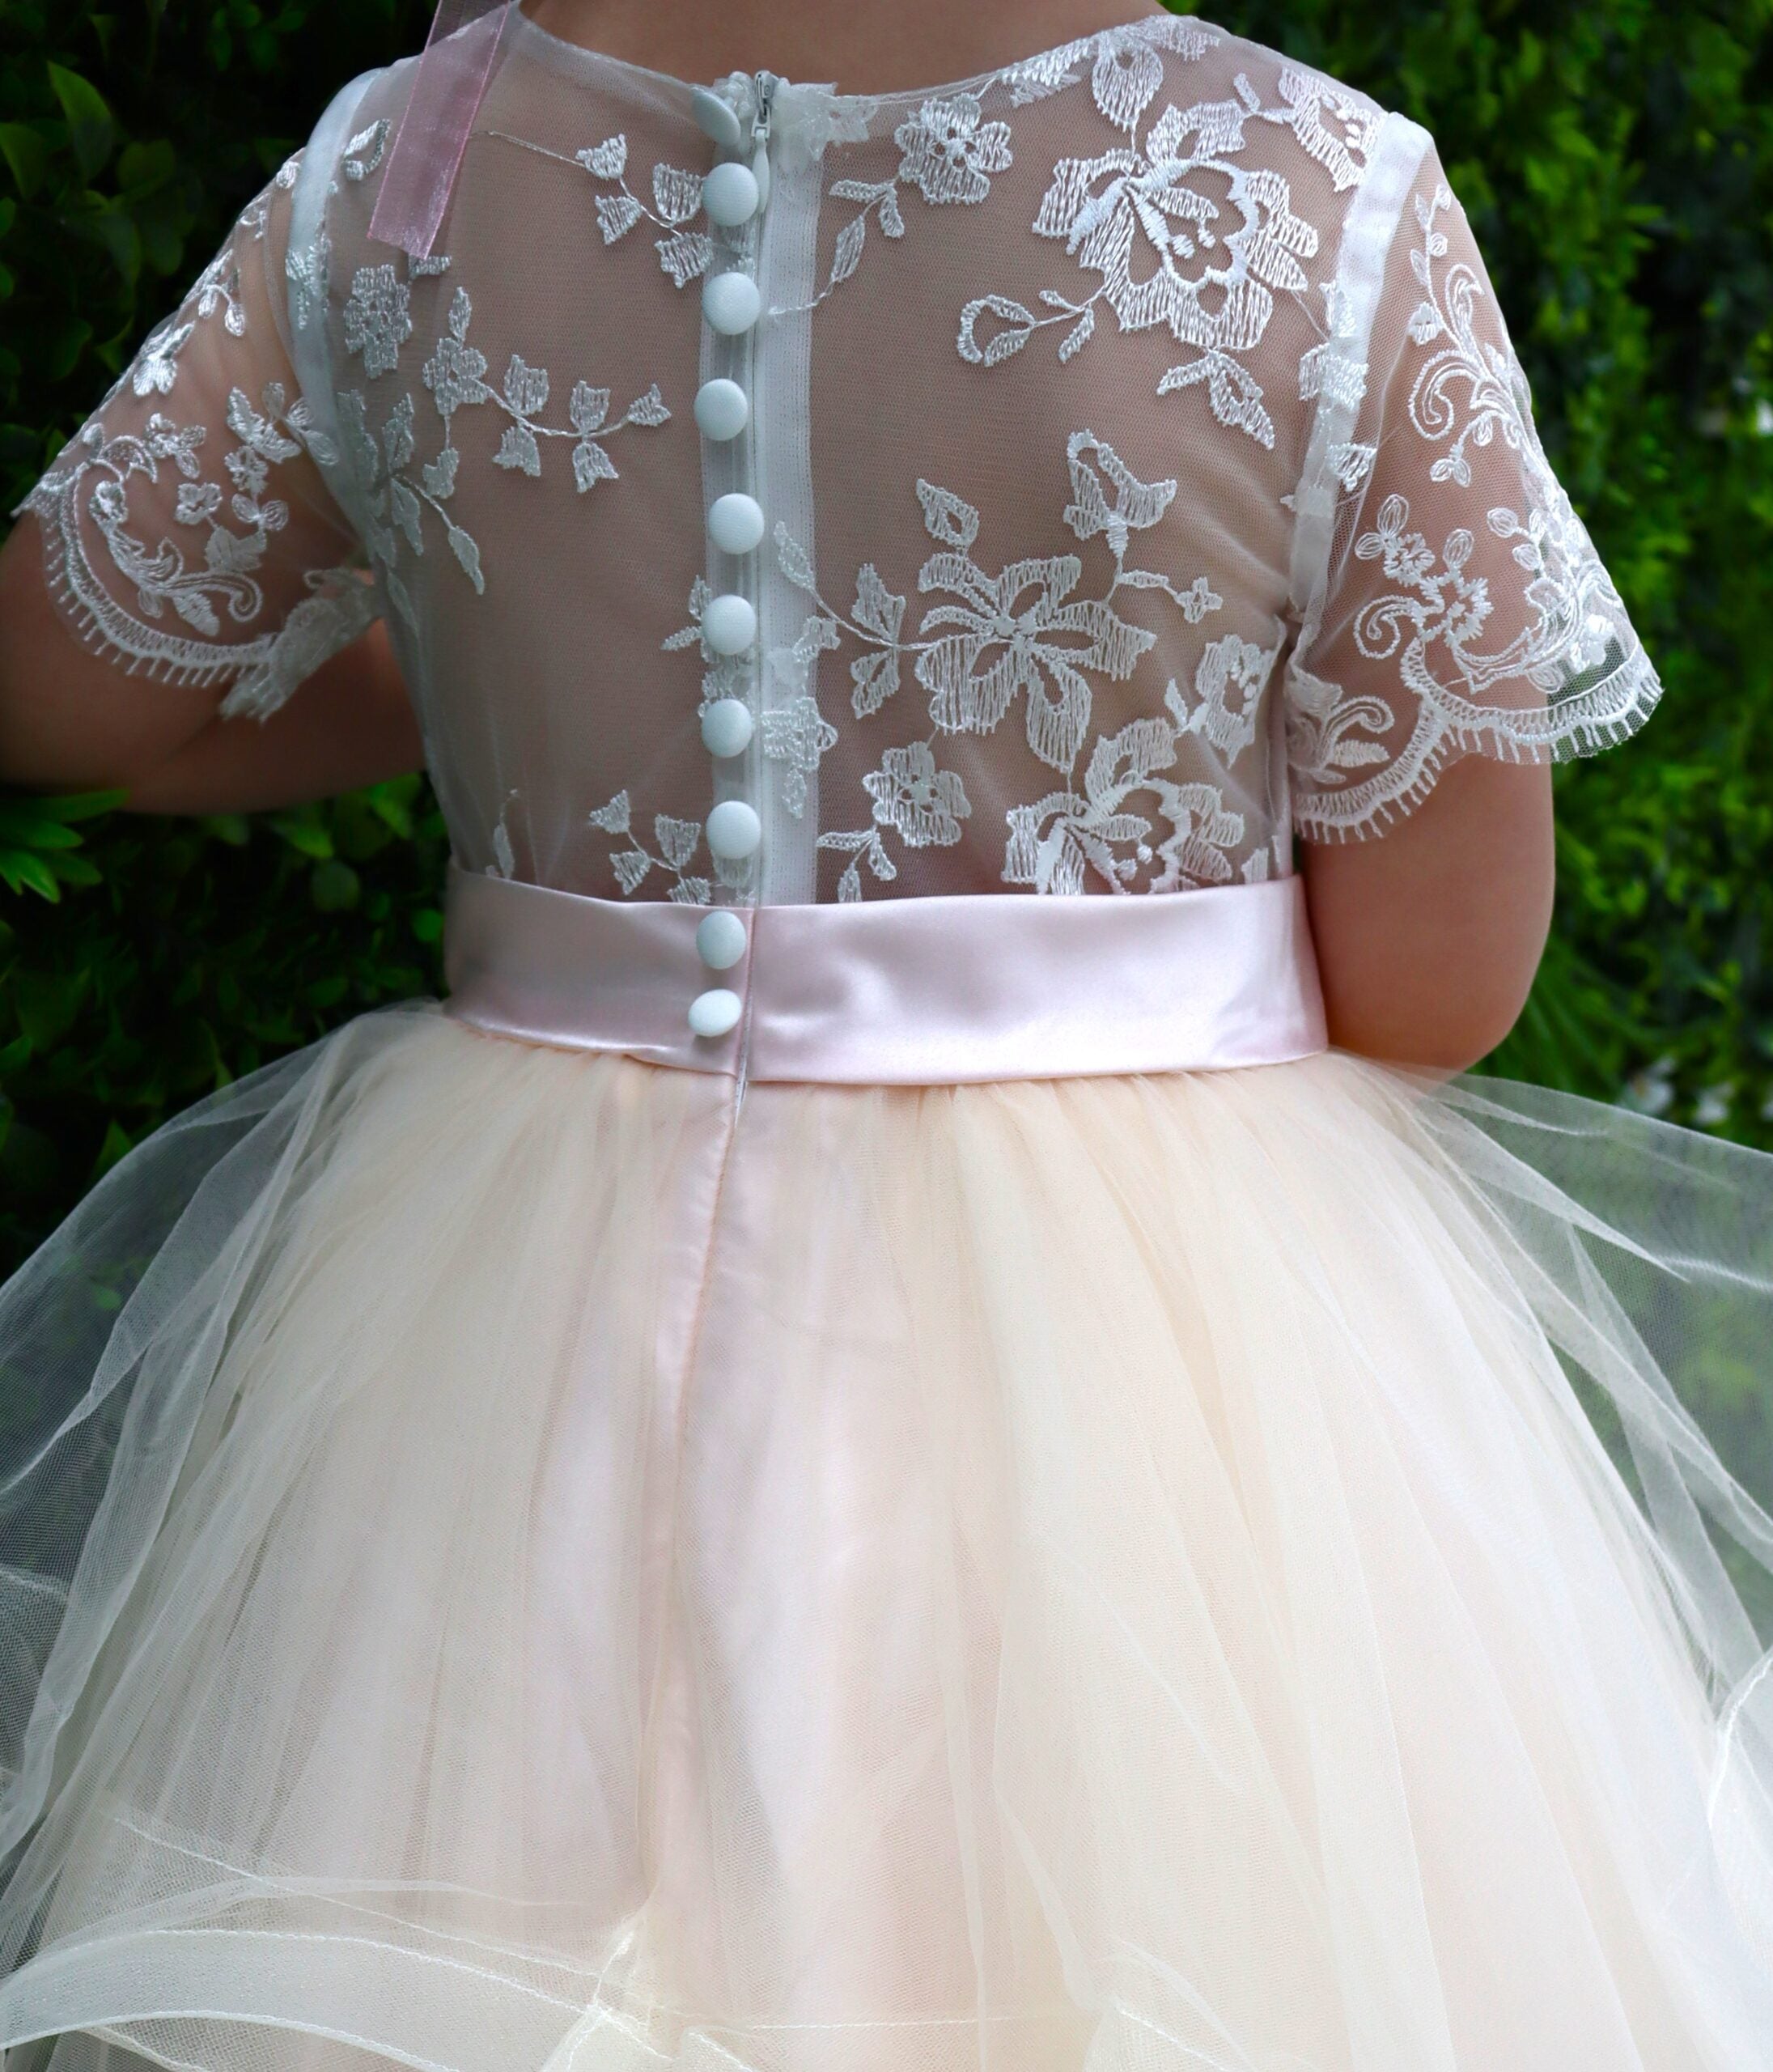 Luxury Handmade Light Pink/White Flower Girl Dress With Horsehair Trim